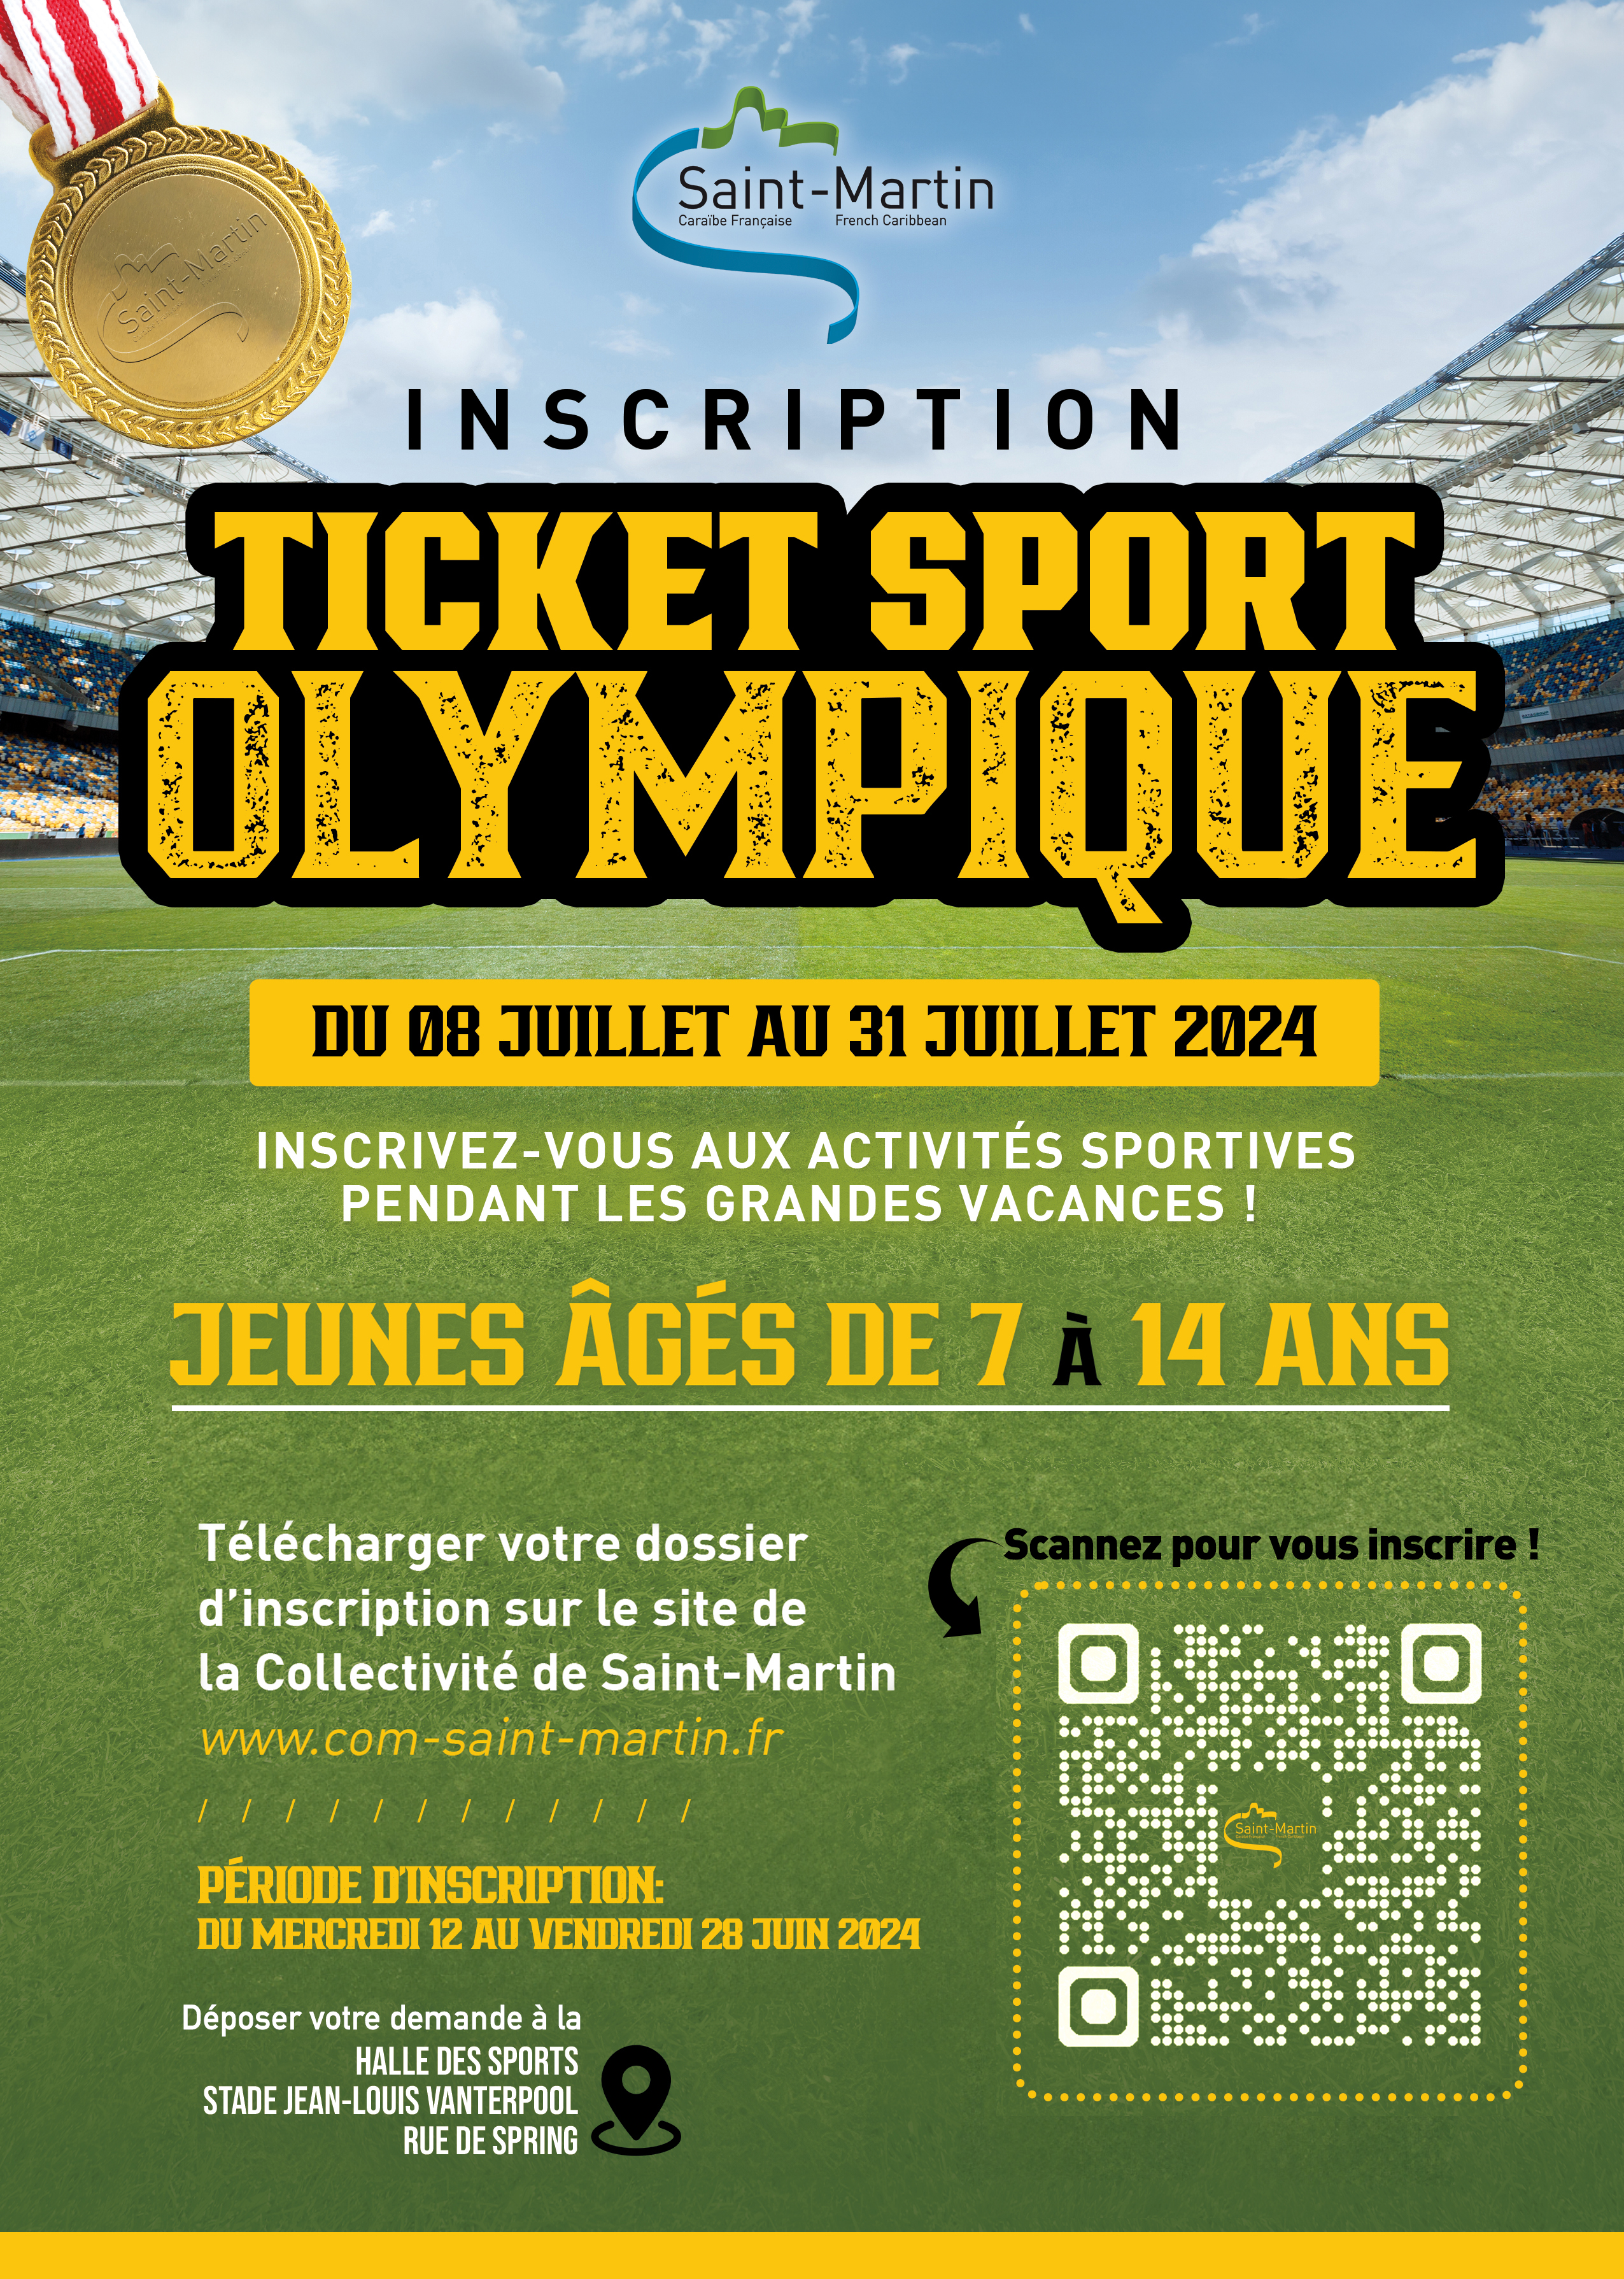 Inscription Ticket - Sports Olympique 2024